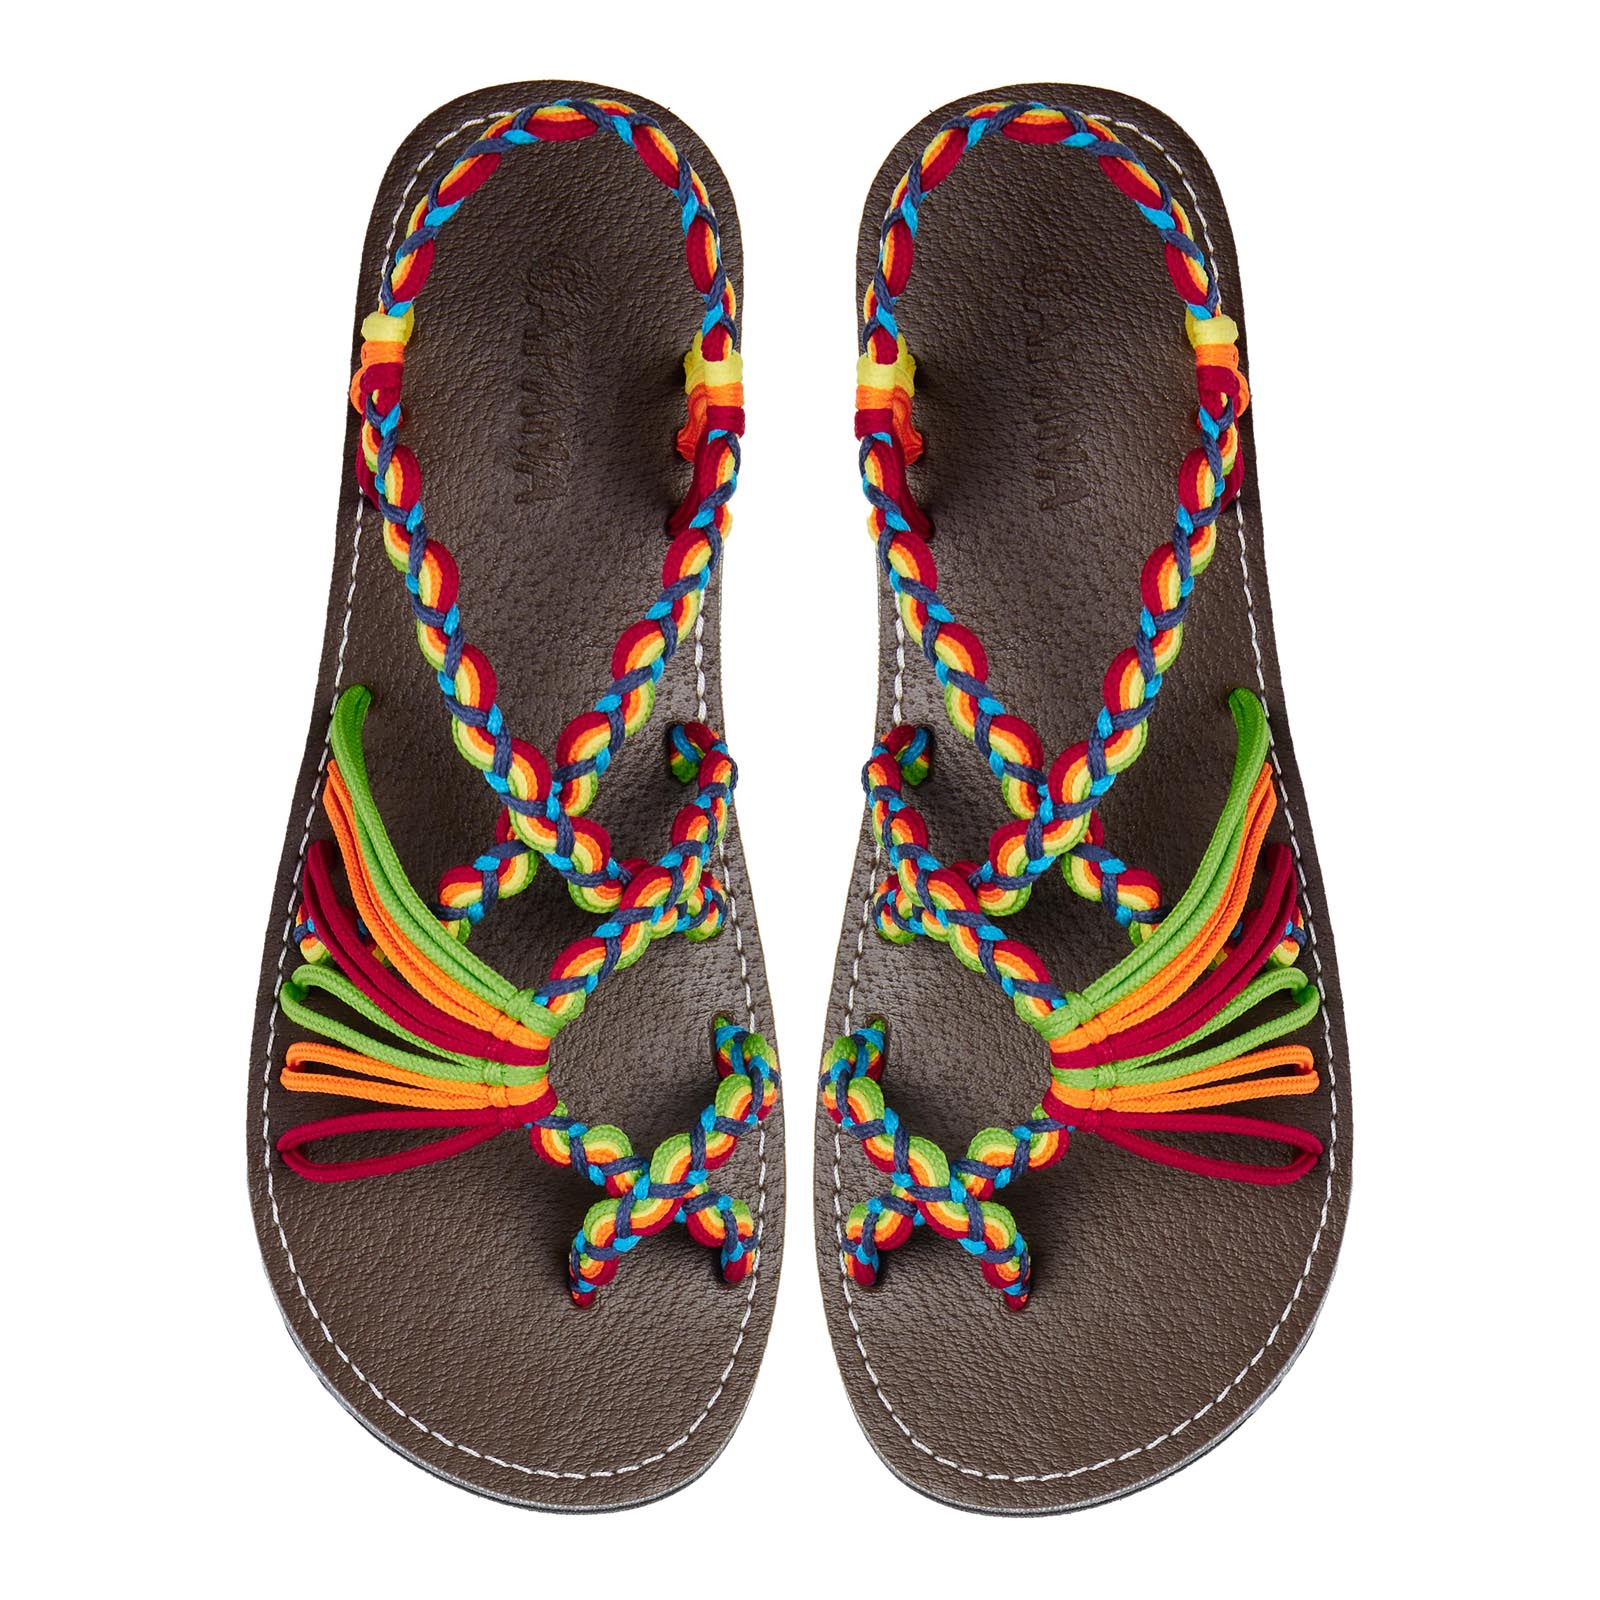 Banyan Festive Rope sandal in rainbow color flat sandal for women